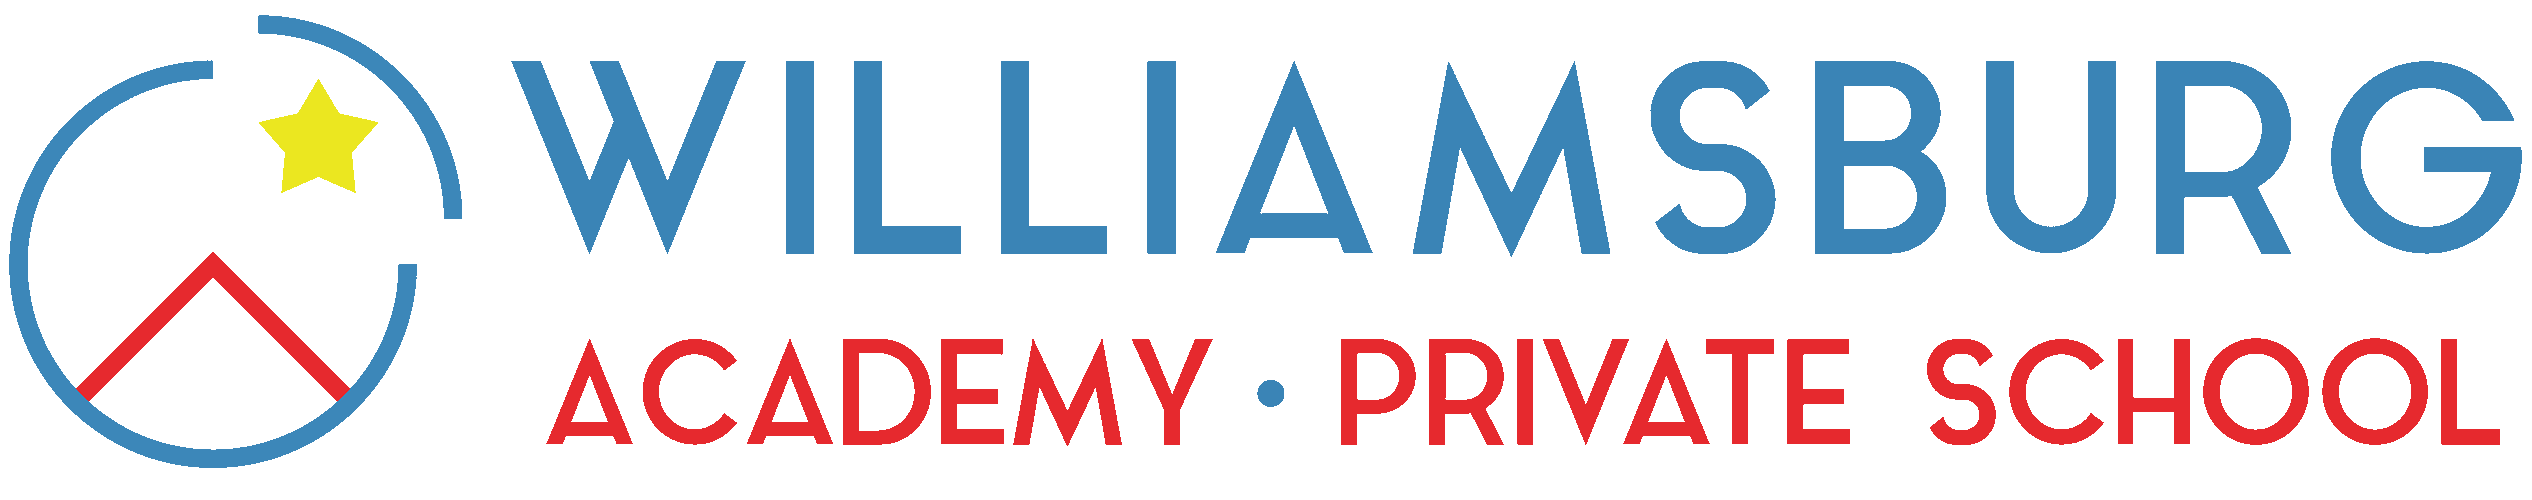 Williamsburg Academy Private School Logo